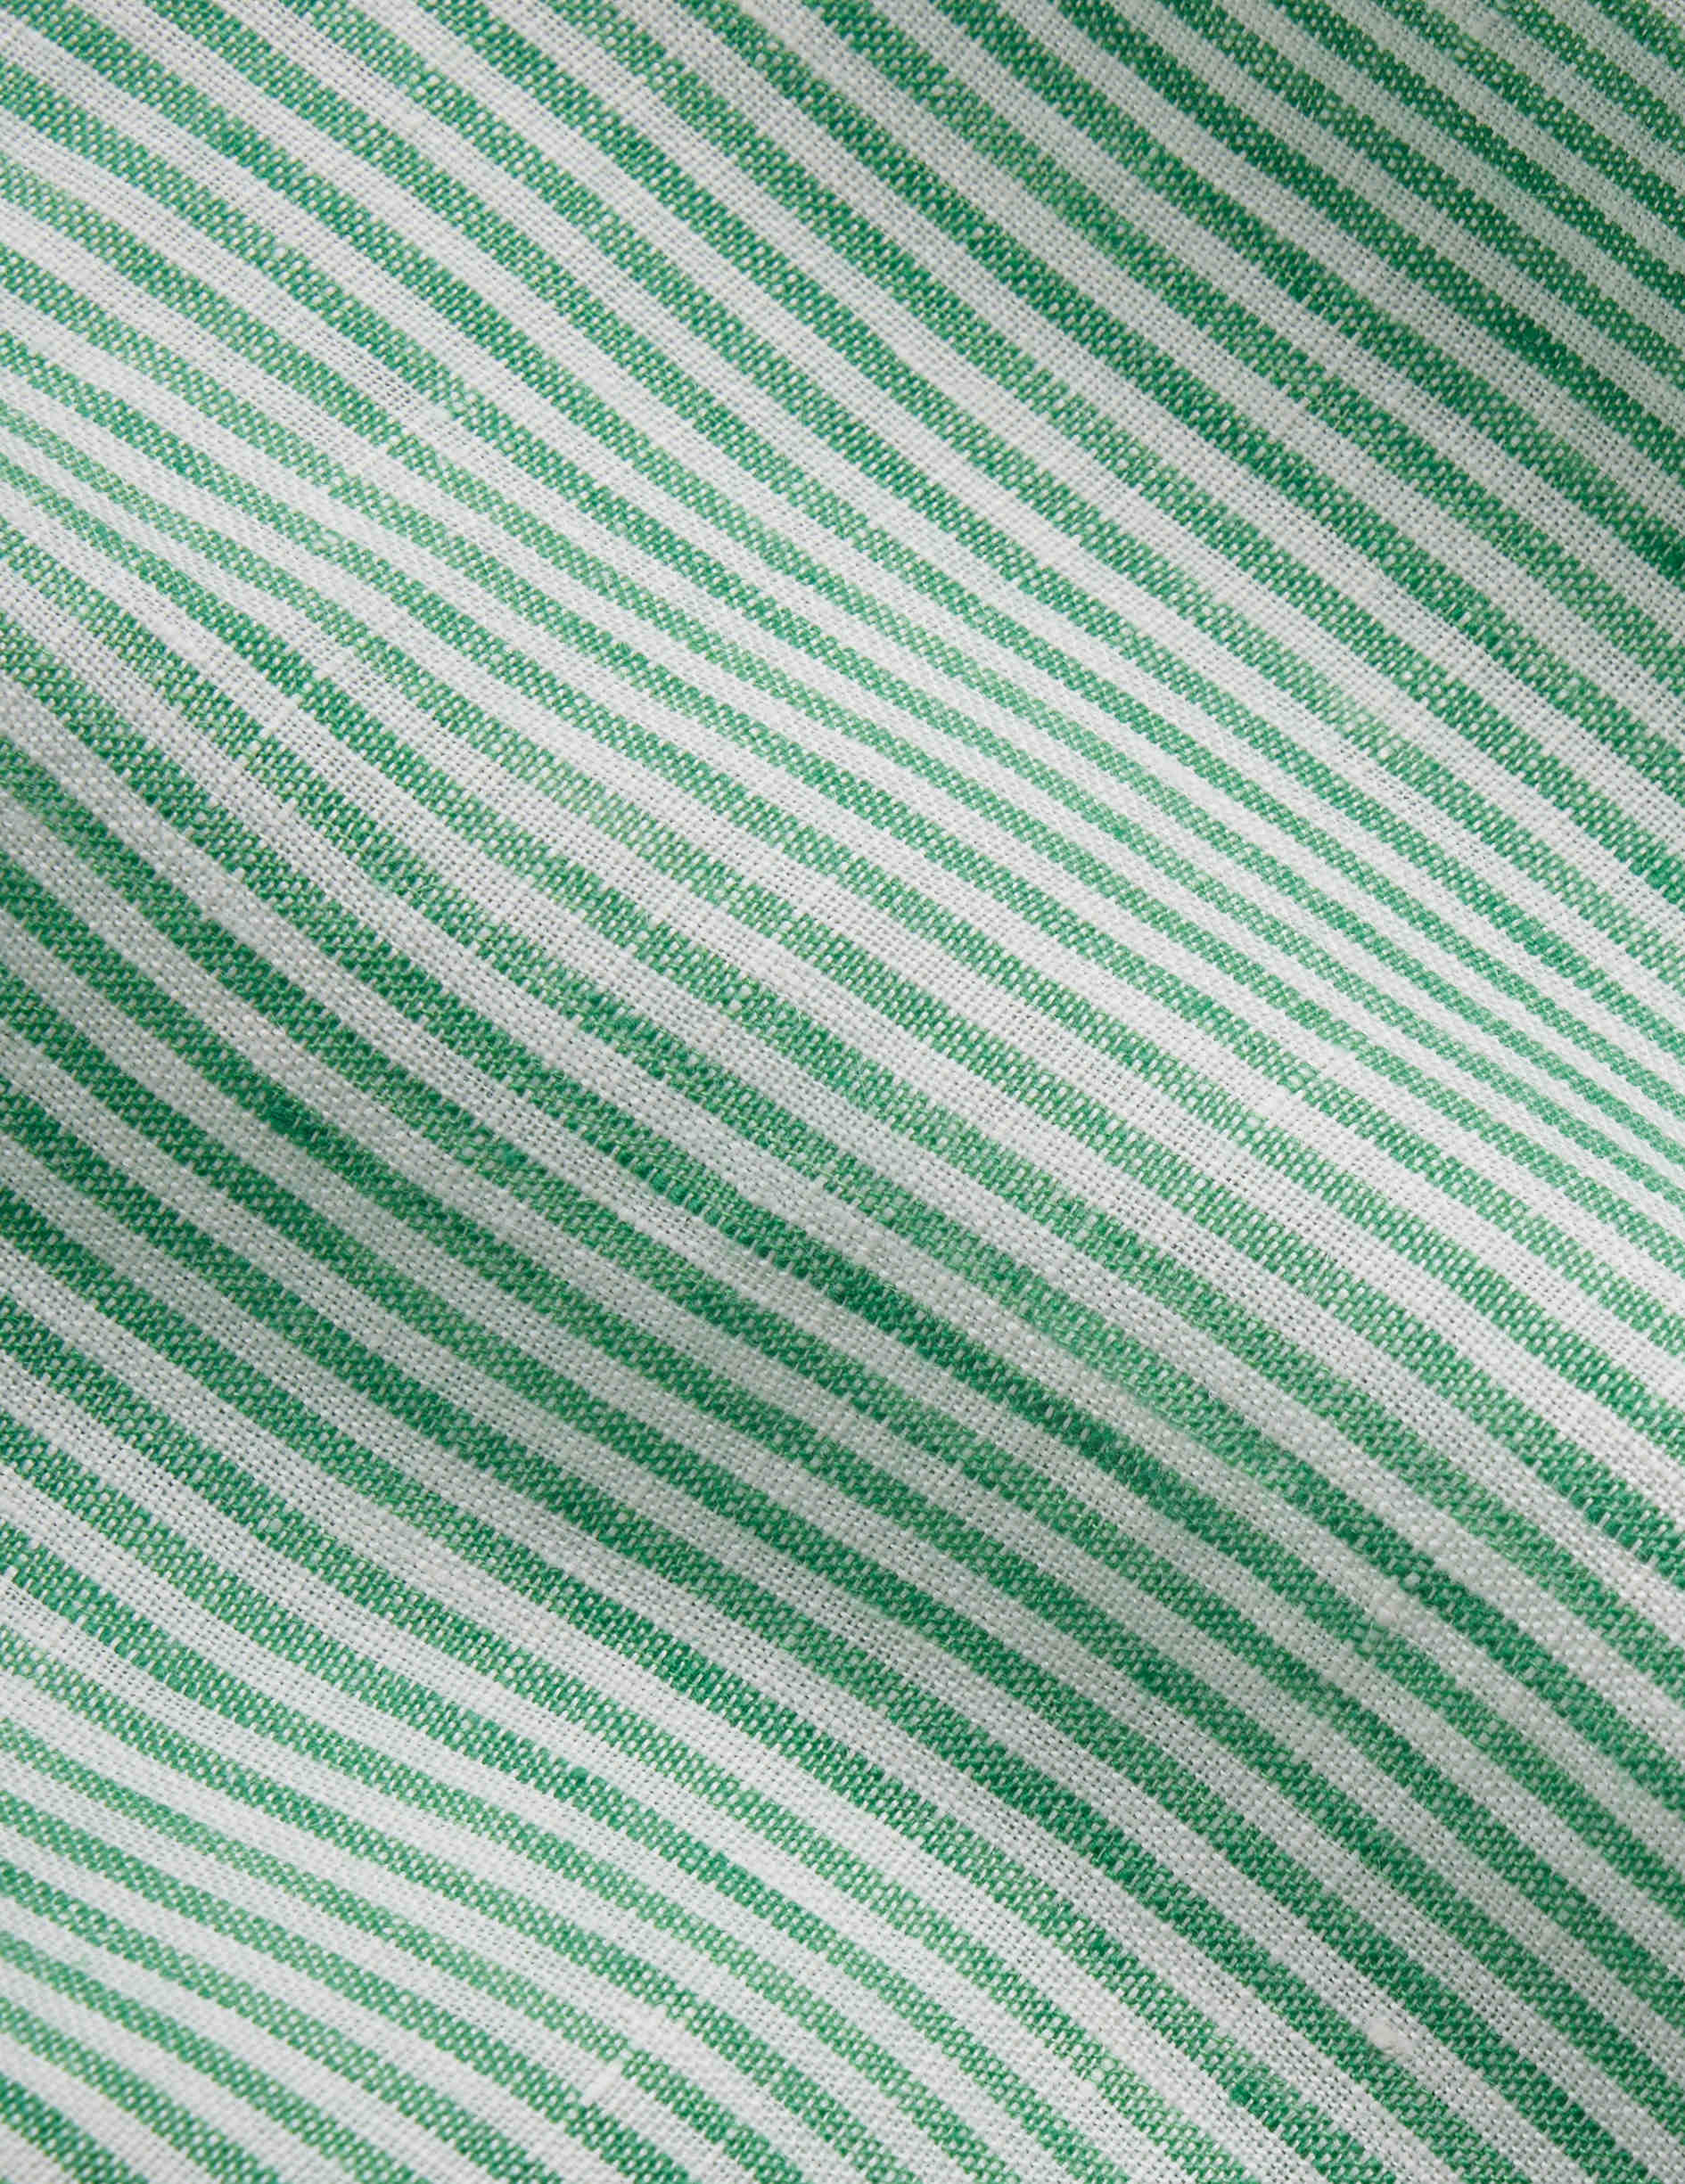 Aristote shirt in green striped linen - Linen - Italian Collar